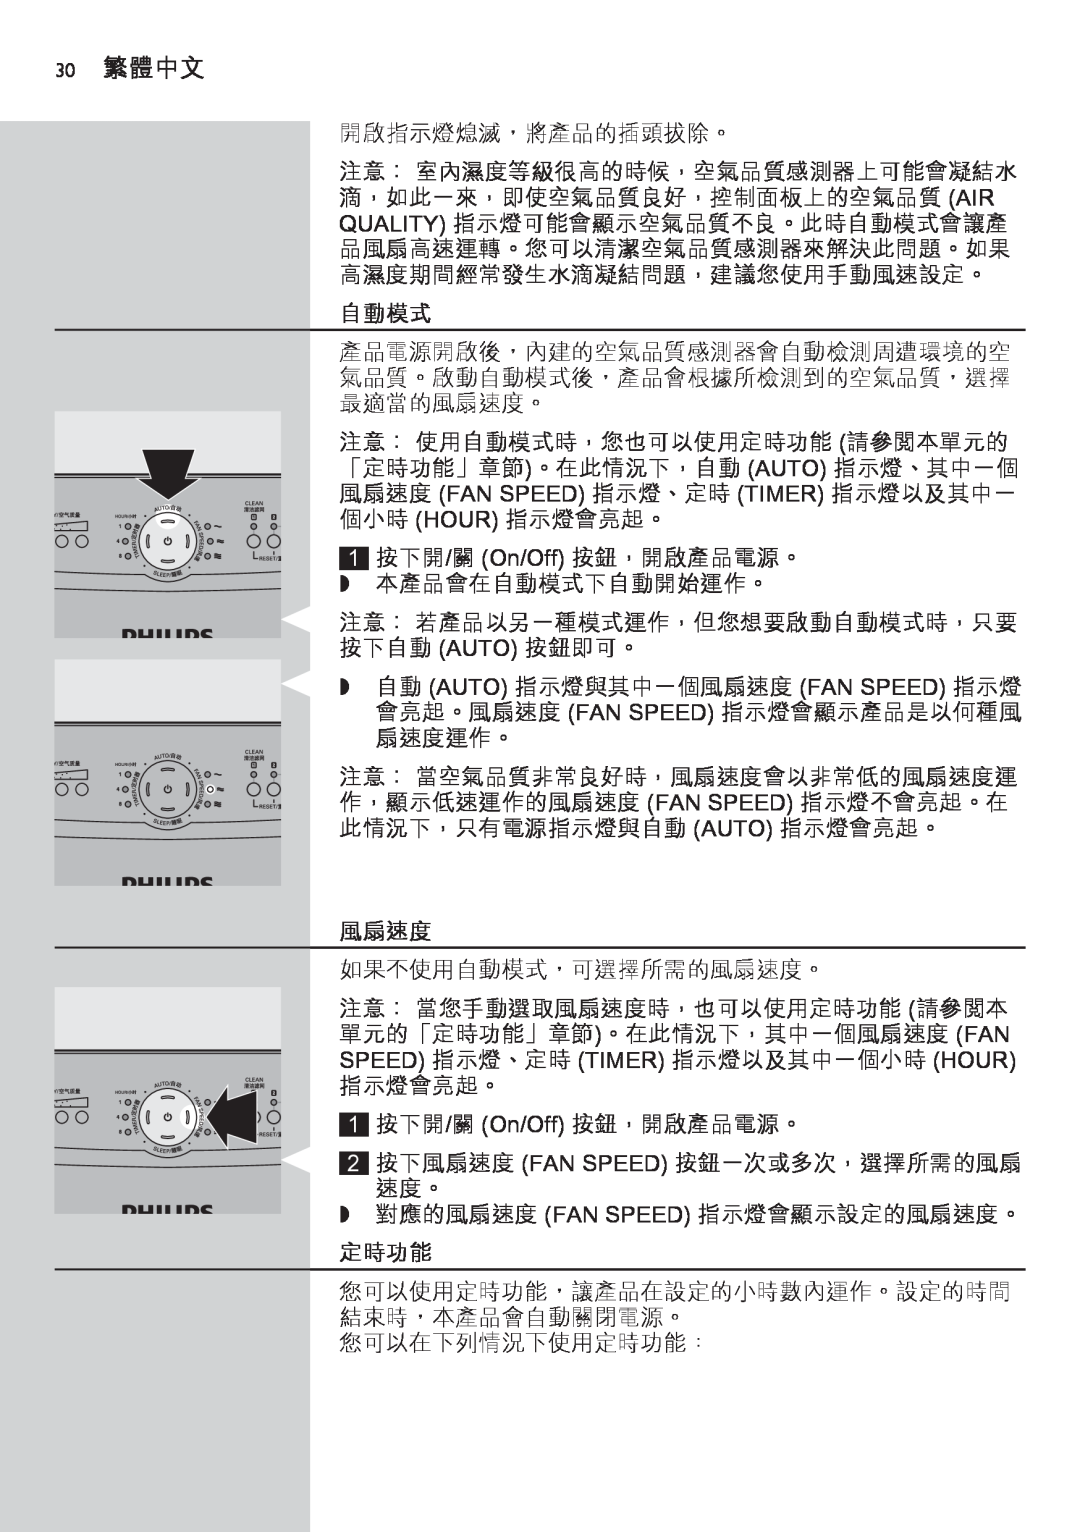 Philips AC4002 manual 30 繁體中文, 自動模式, 風扇速度, 定時功能 